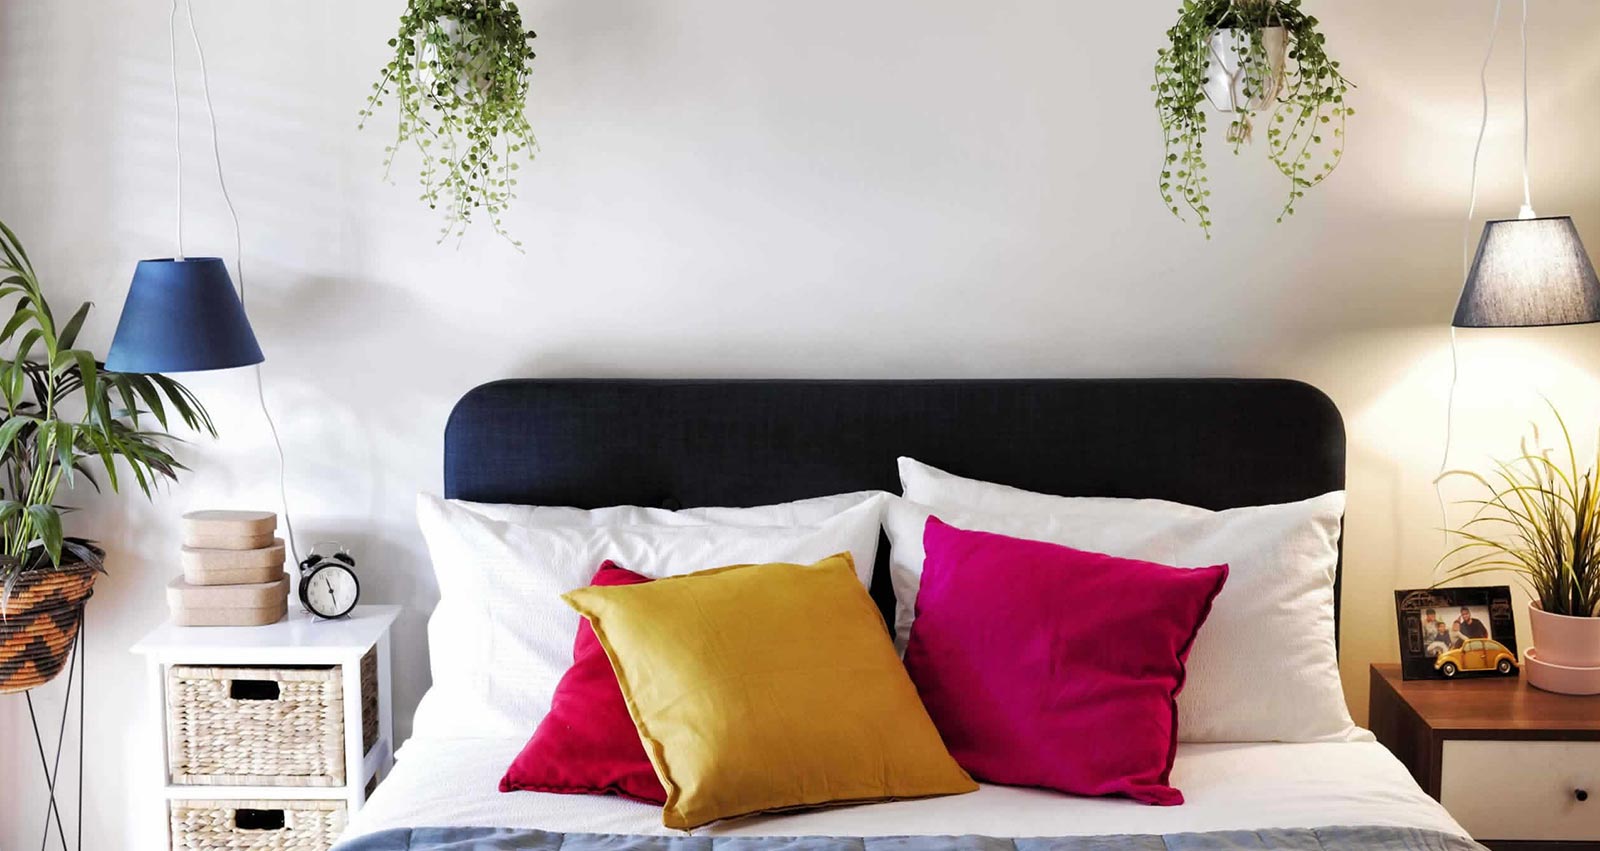 IKEA-Refresh your bedroom in 3 easy steps 04y